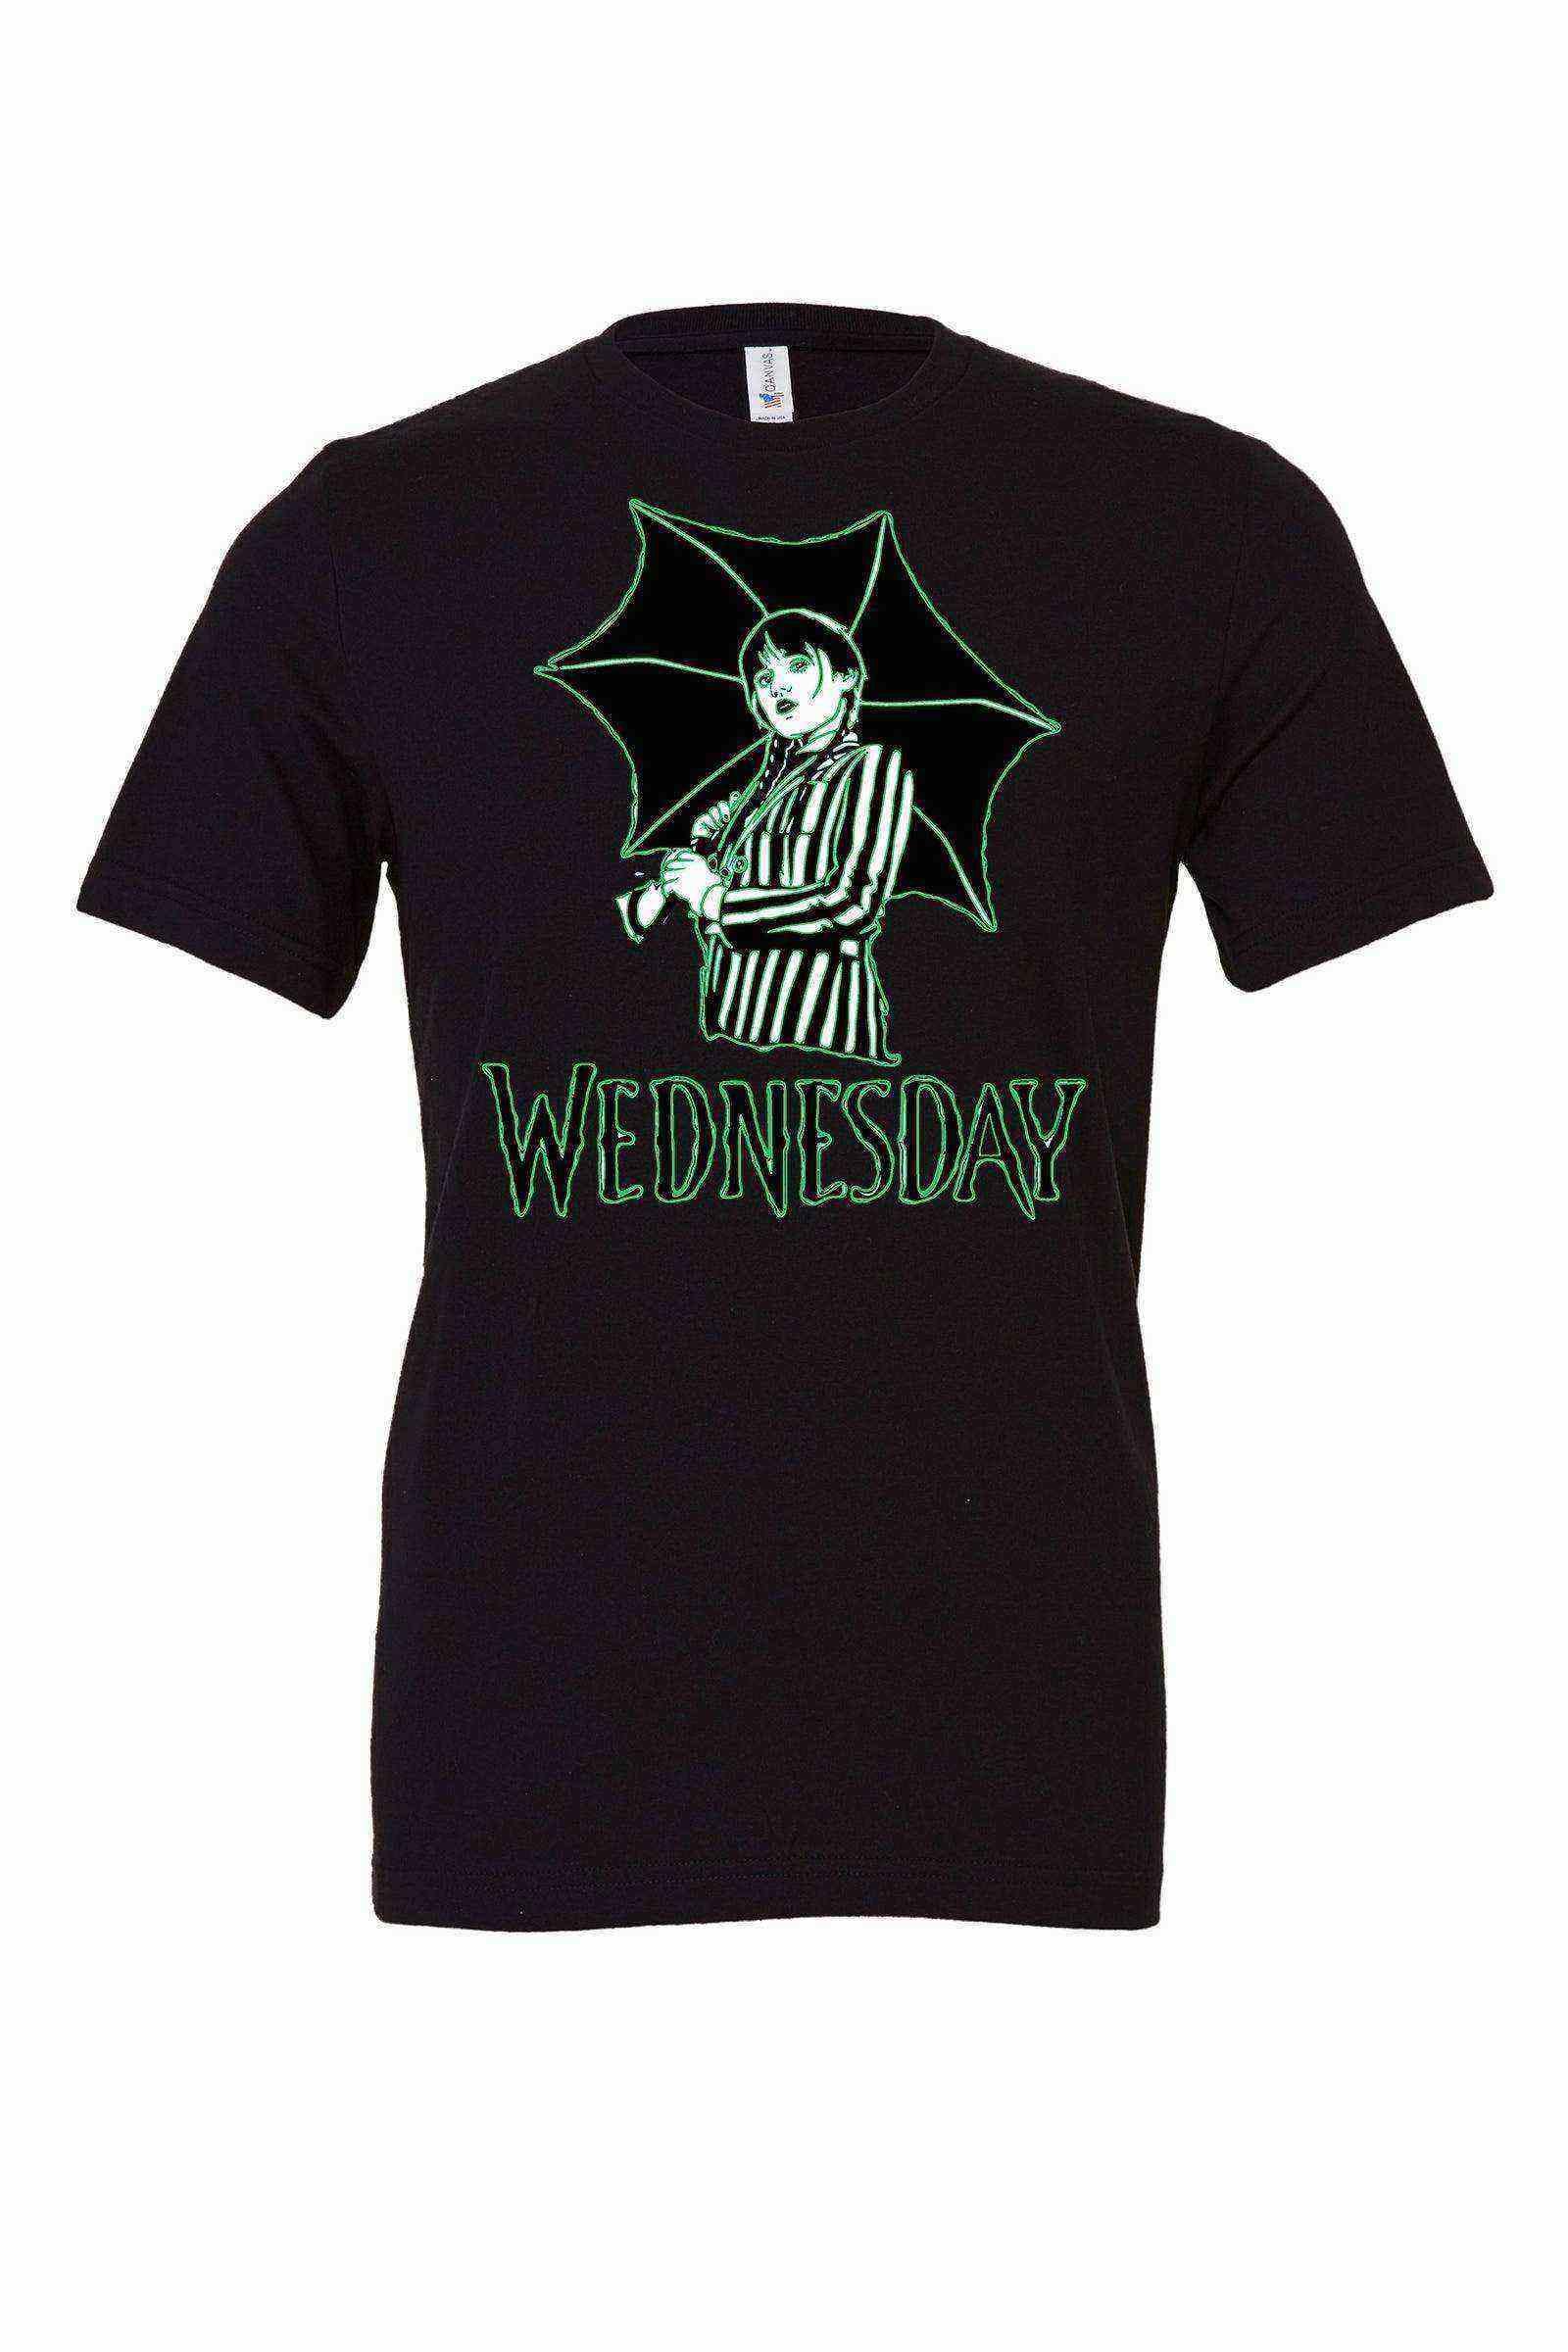 Toddler | Umbrella Wednesday Shirt | Wednesday Shirt - Dylan's Tees